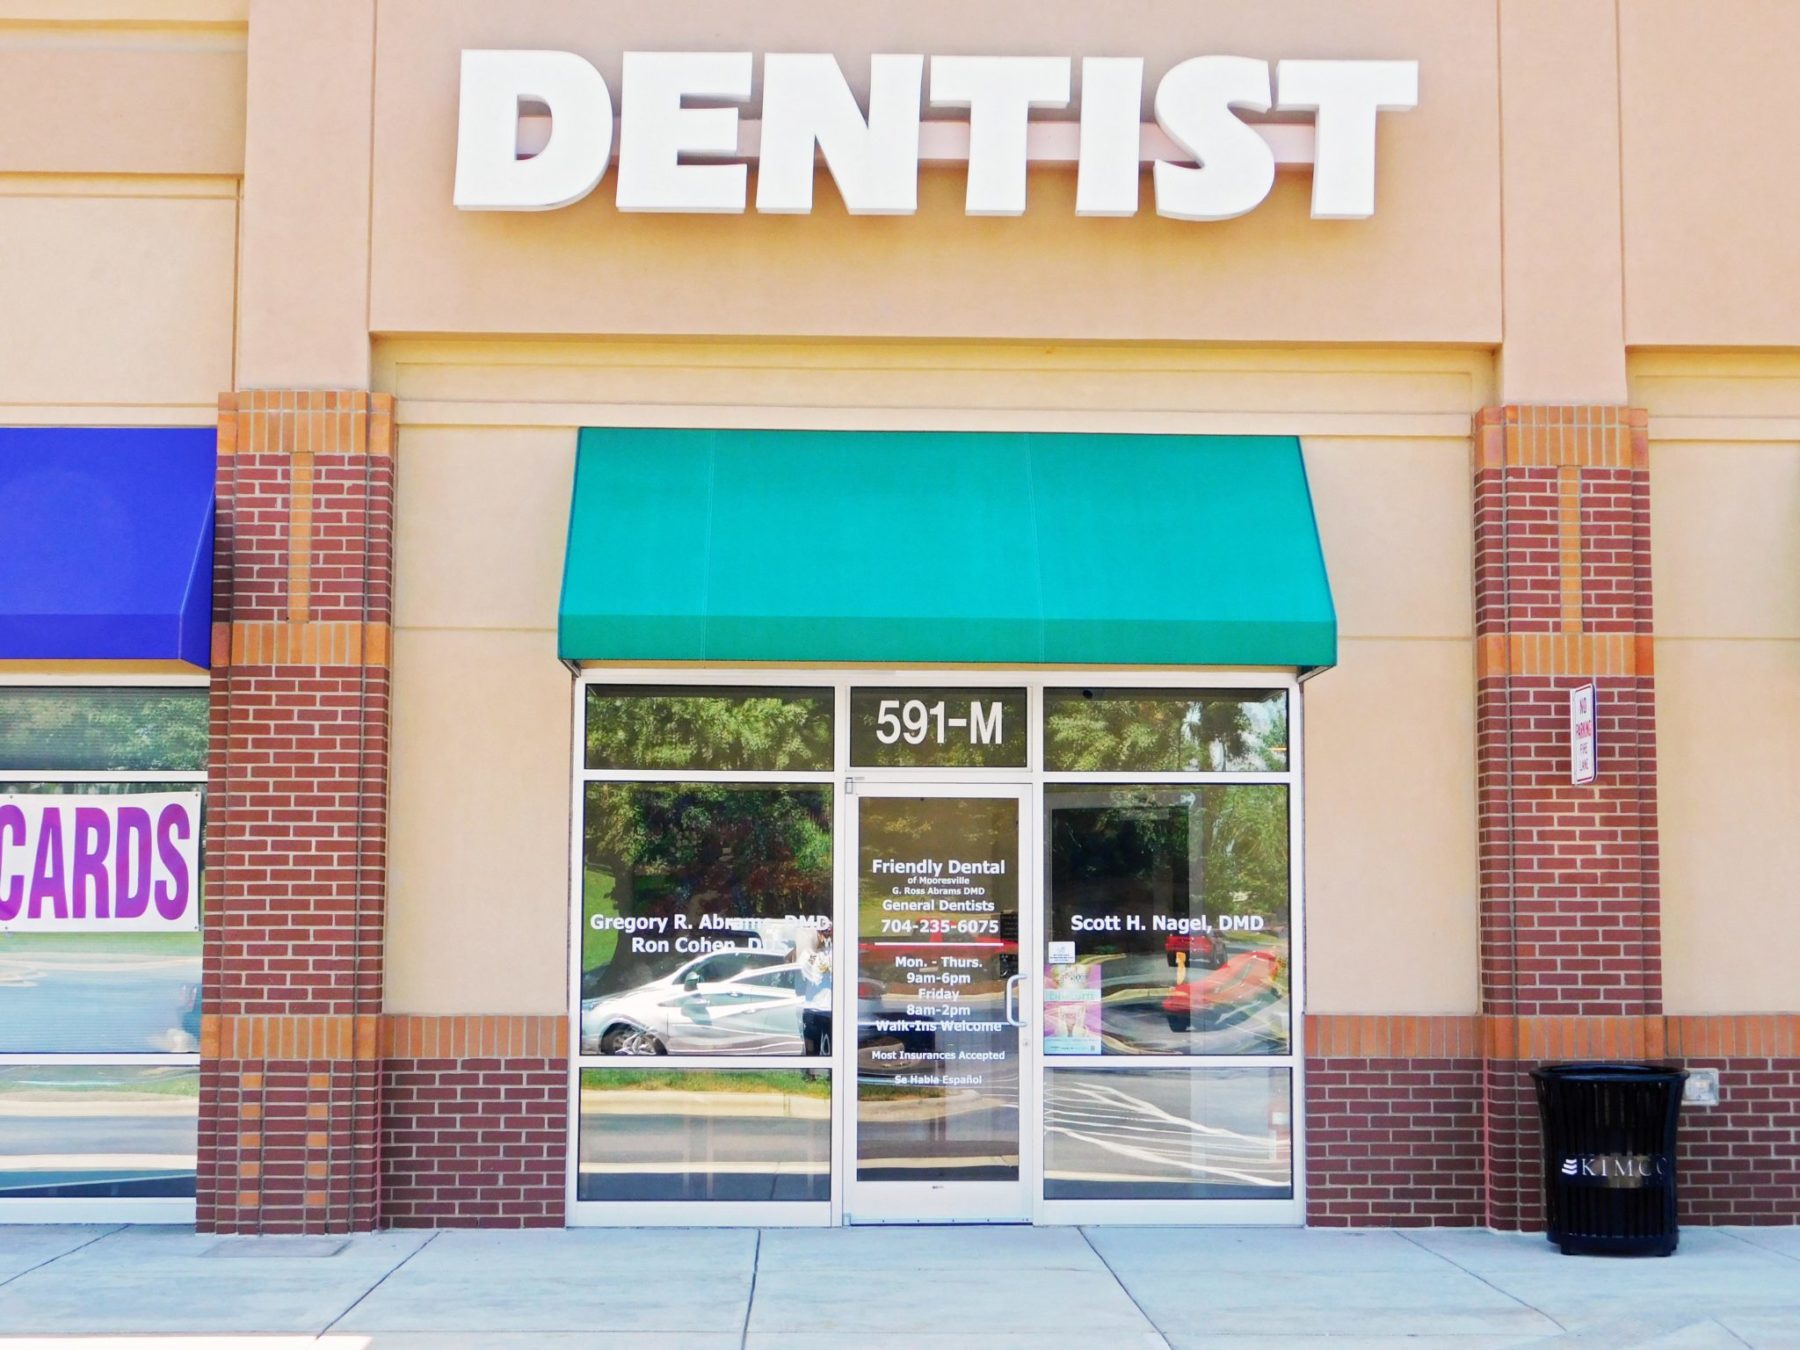 Best Dentist Mooresville, NC | 704-235-6075 | Friendly Dental Mooresville